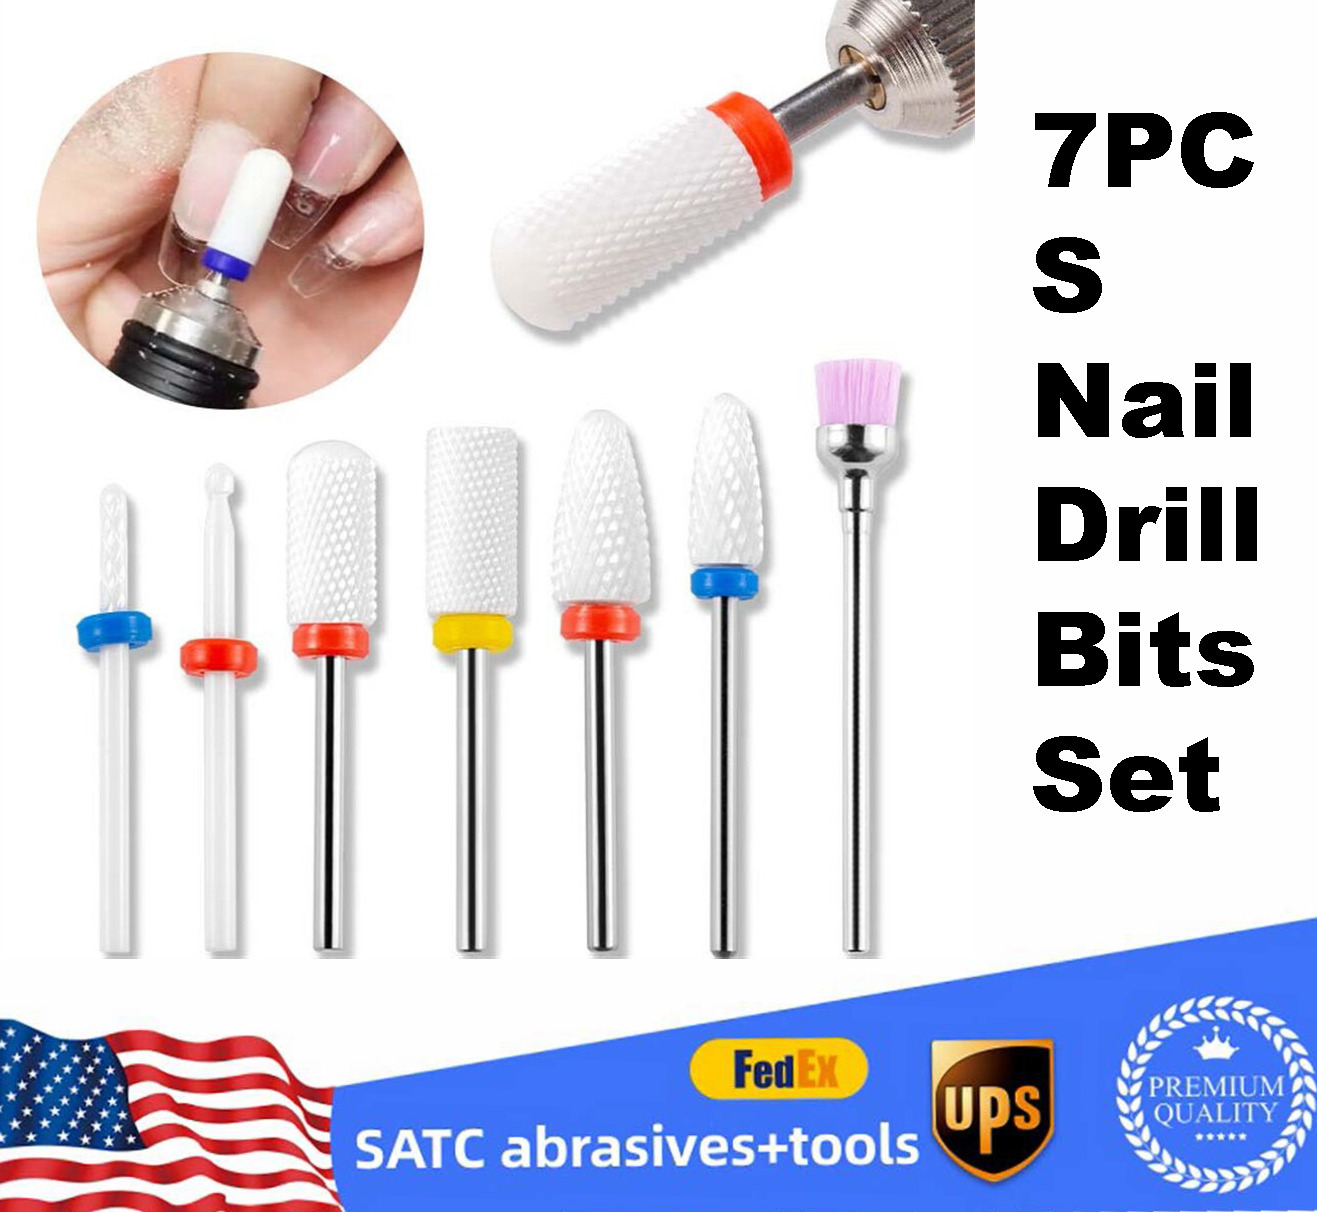 Ceramic Nail Drill Bits Set Electric File Manicure Pedicure Nail Art Tools 7PCS